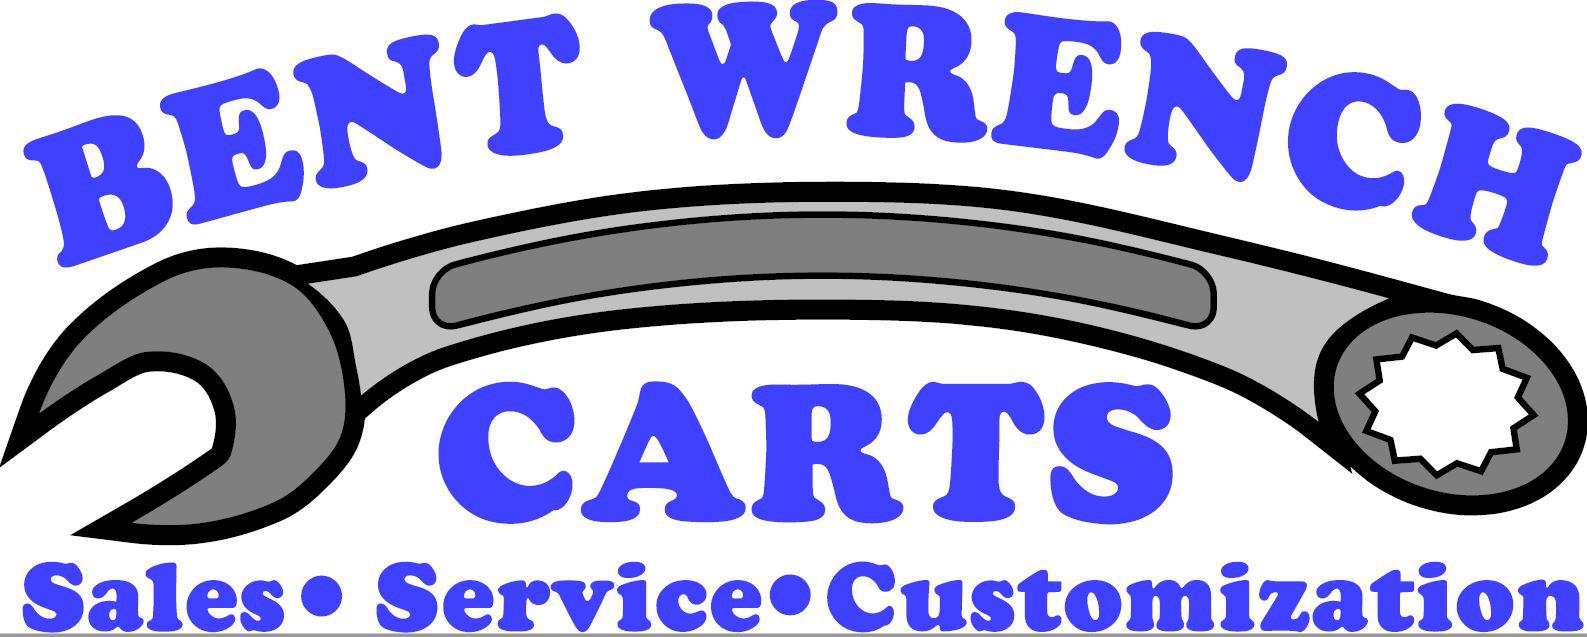 Bent Wrench Carts Logo